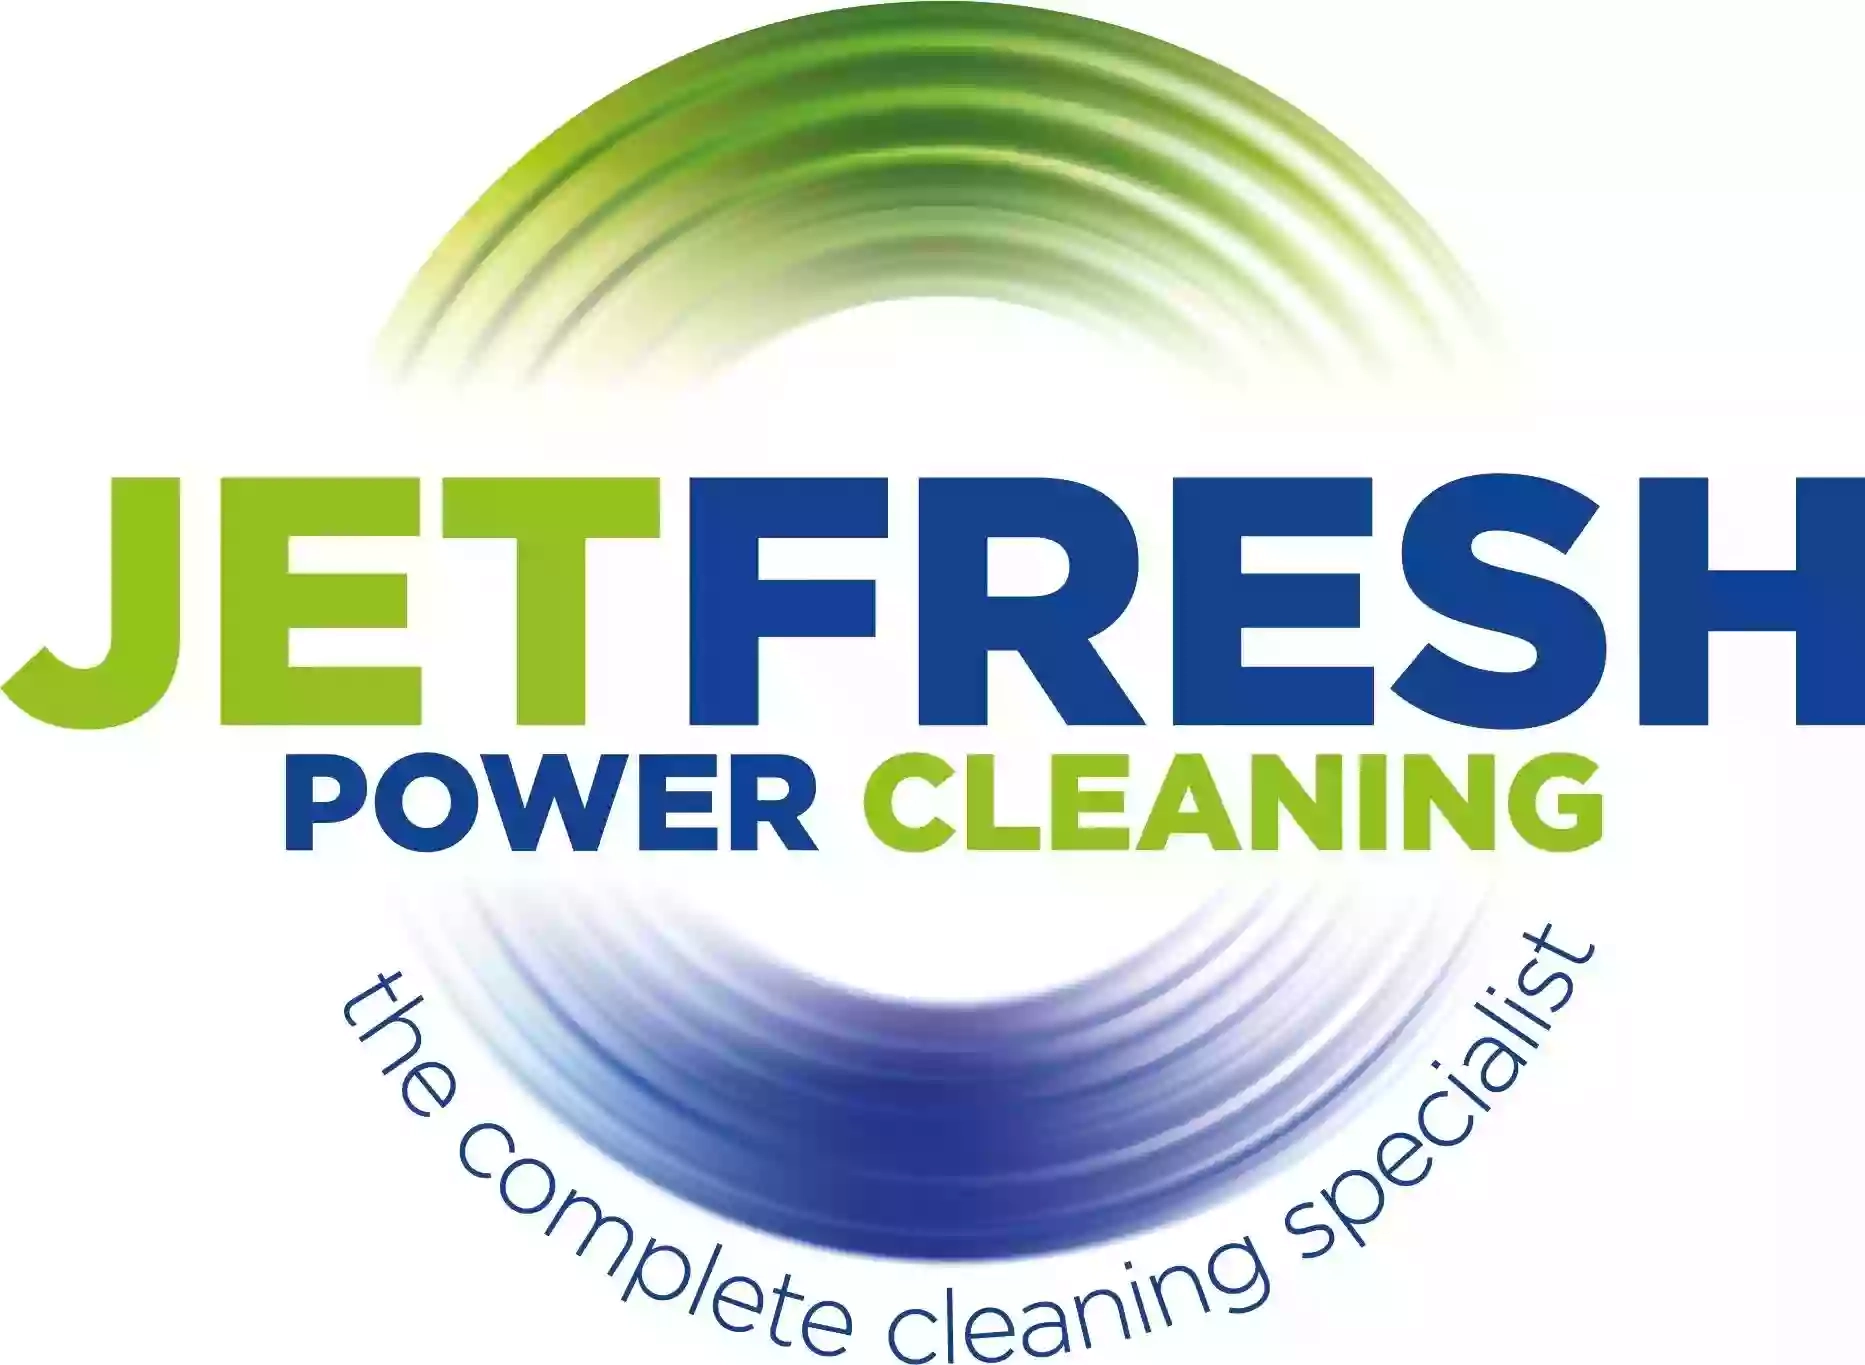 Jetfresh Power Cleaning